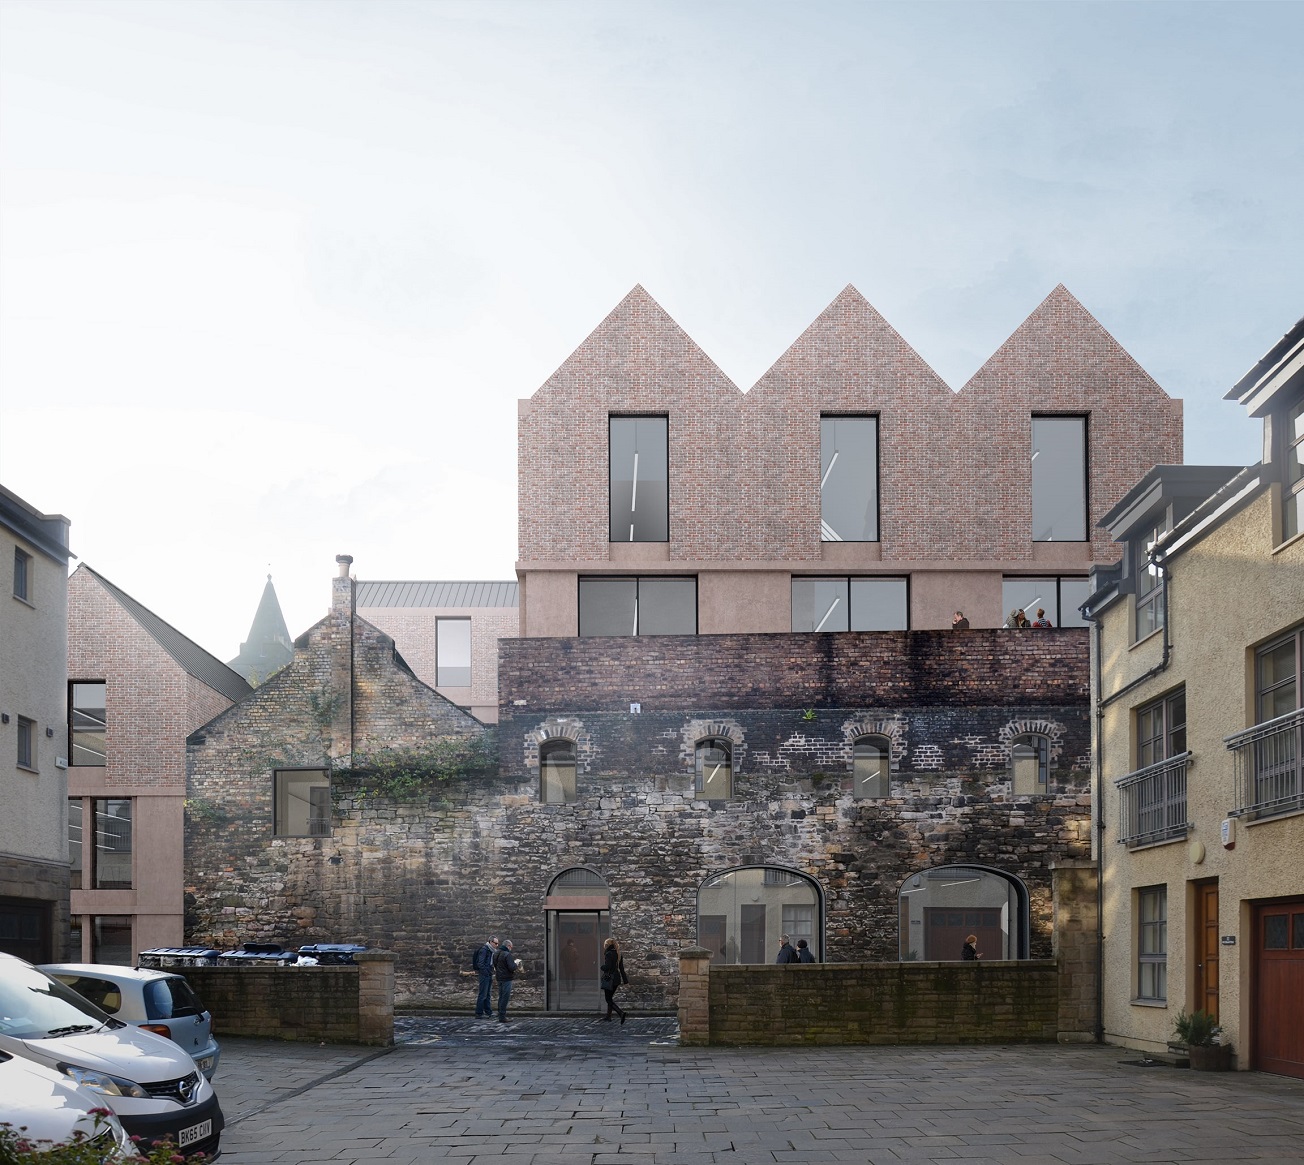 New office development proposed for Edinburgh’s Canongate